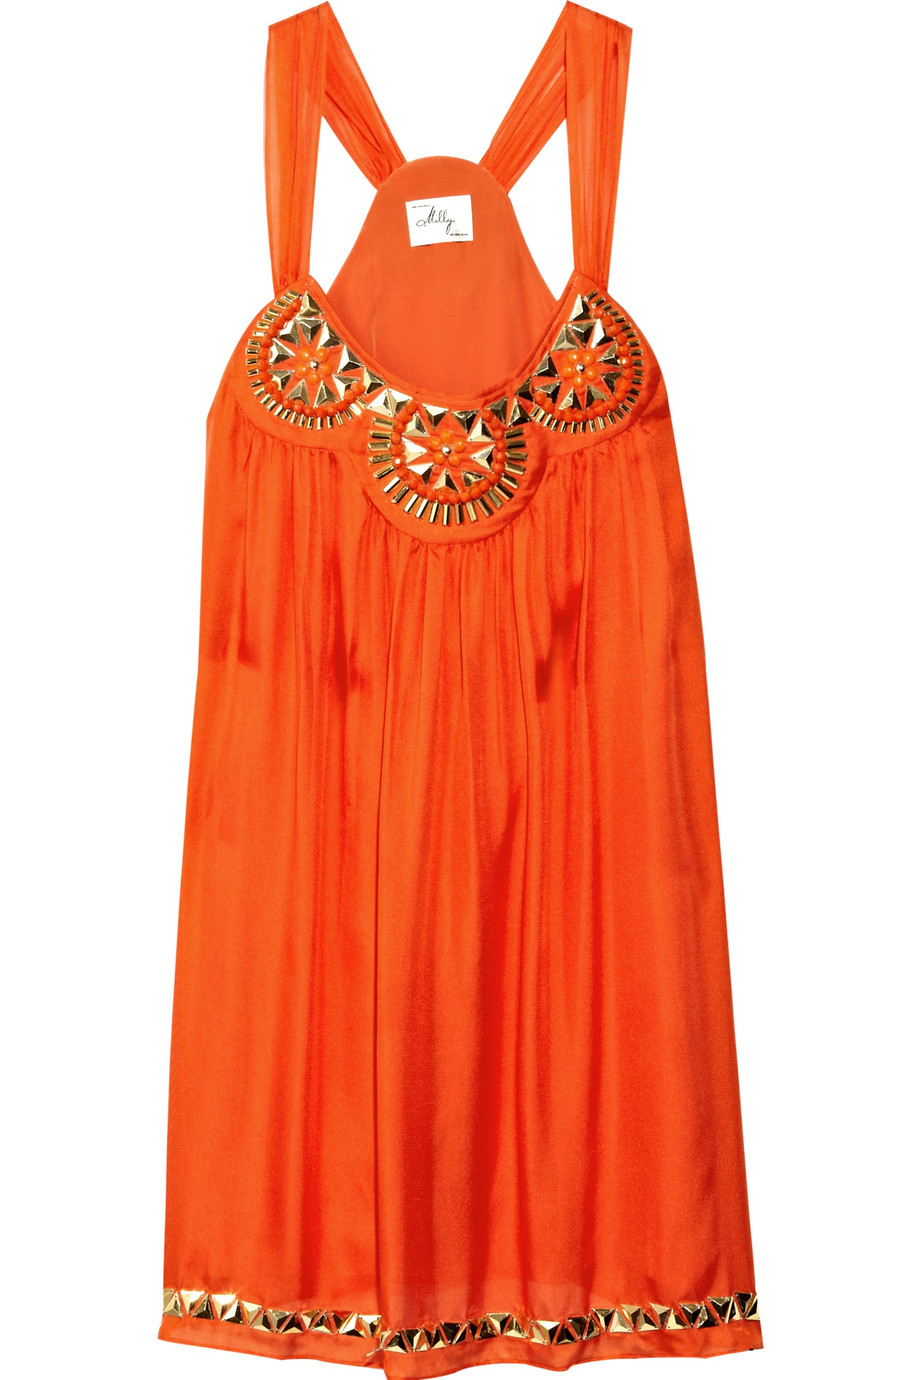 Milly Embellished Silk Trapeze Dress in Orange | Lyst